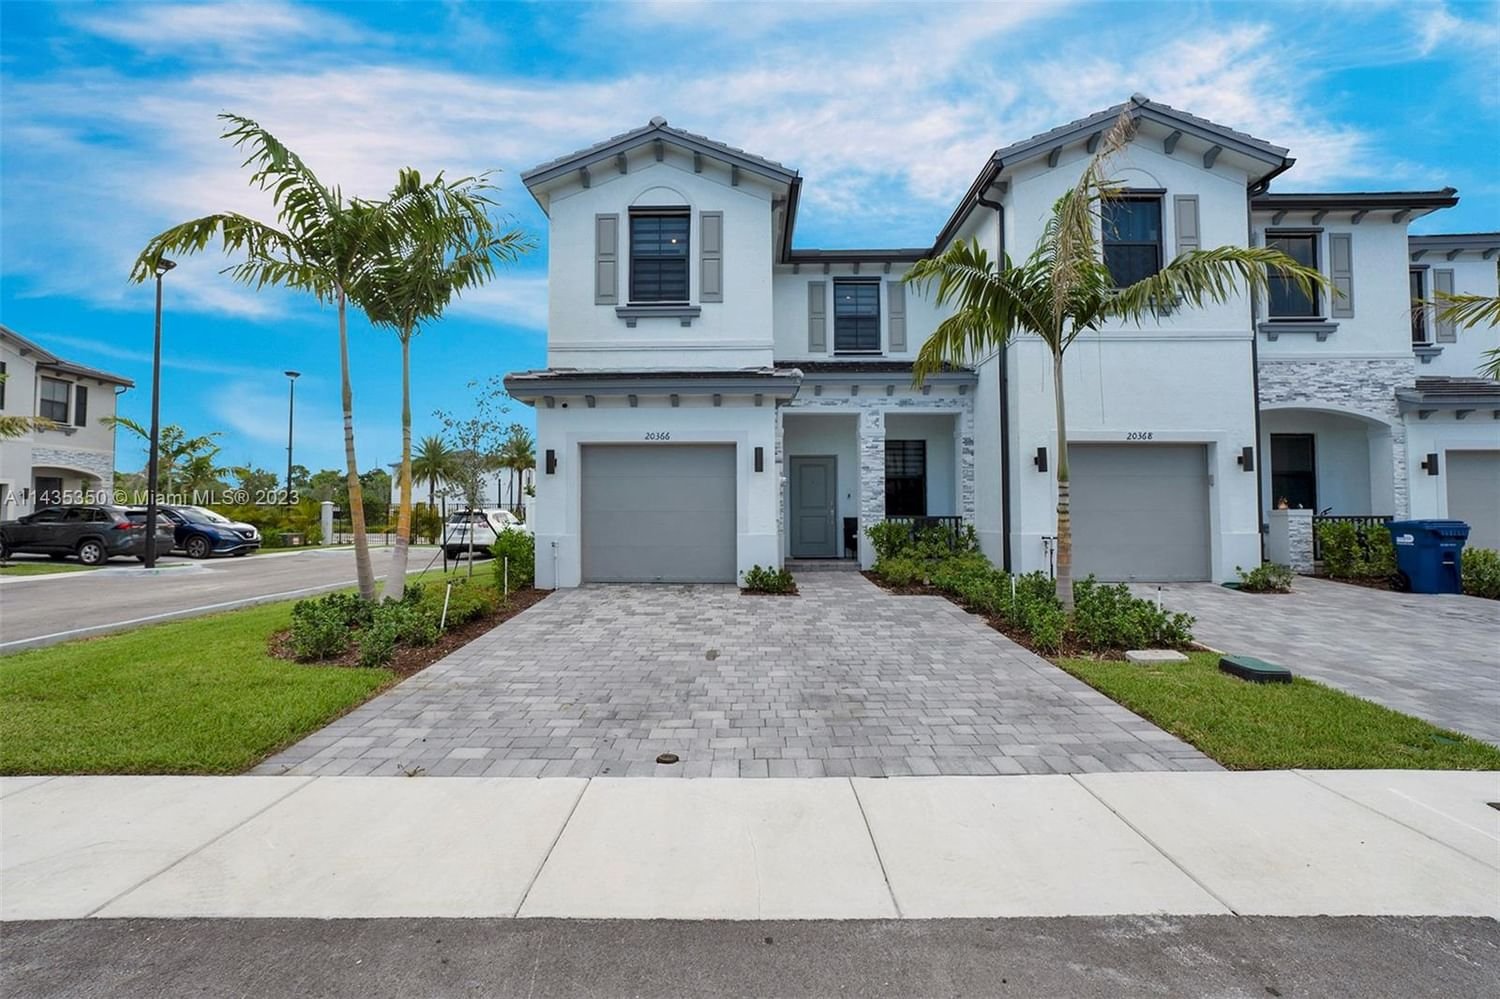 Real estate property located at 20366 4th Path, Miami-Dade County, Miami Gardens, FL